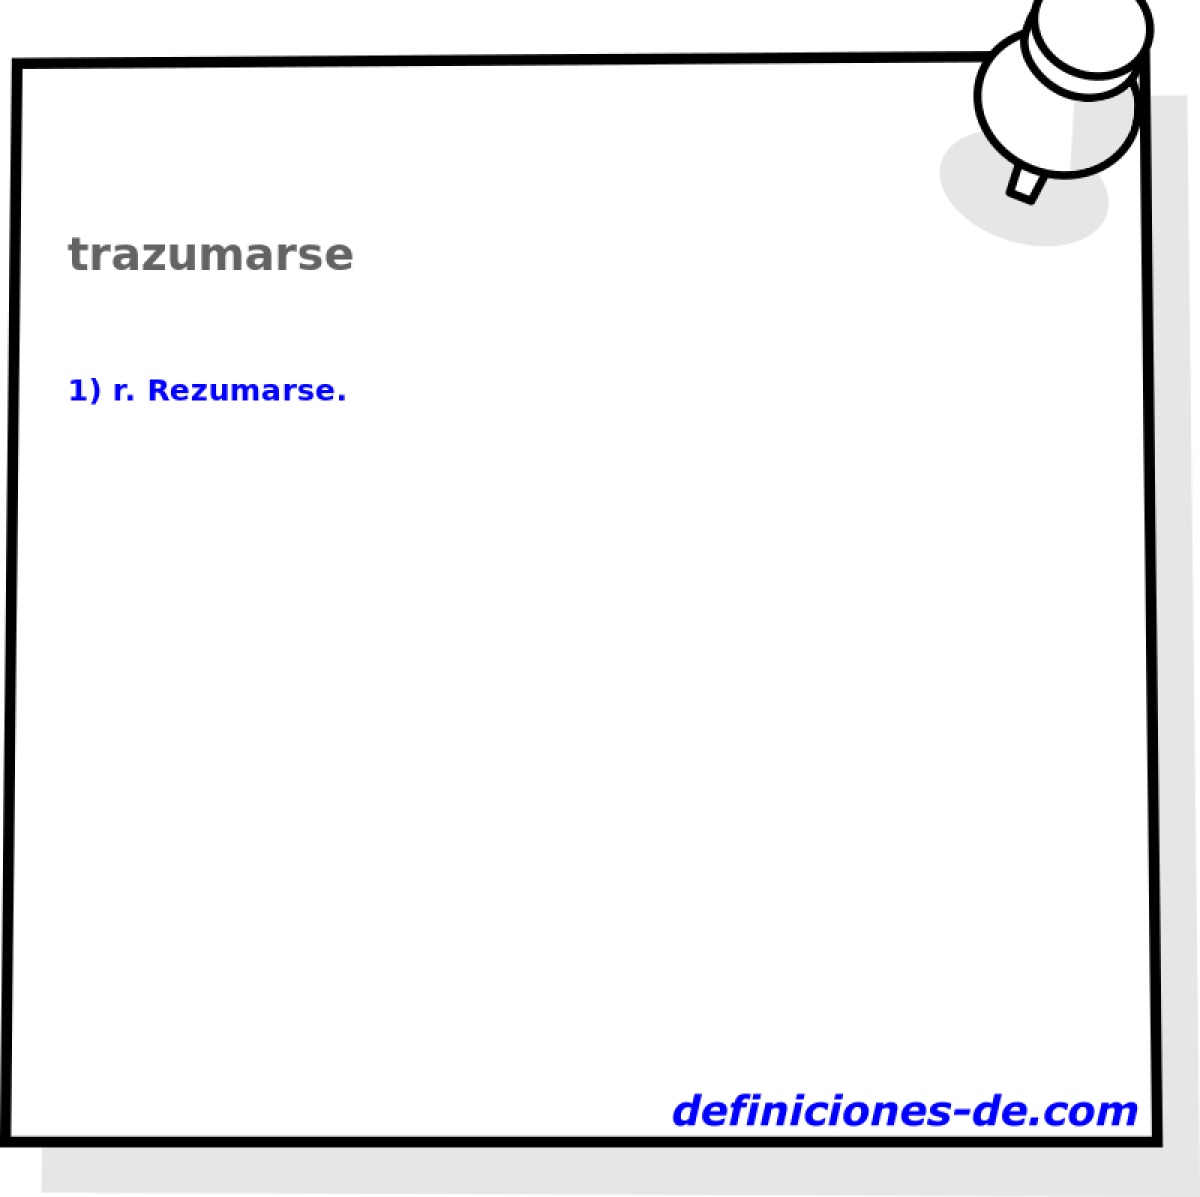 trazumarse 